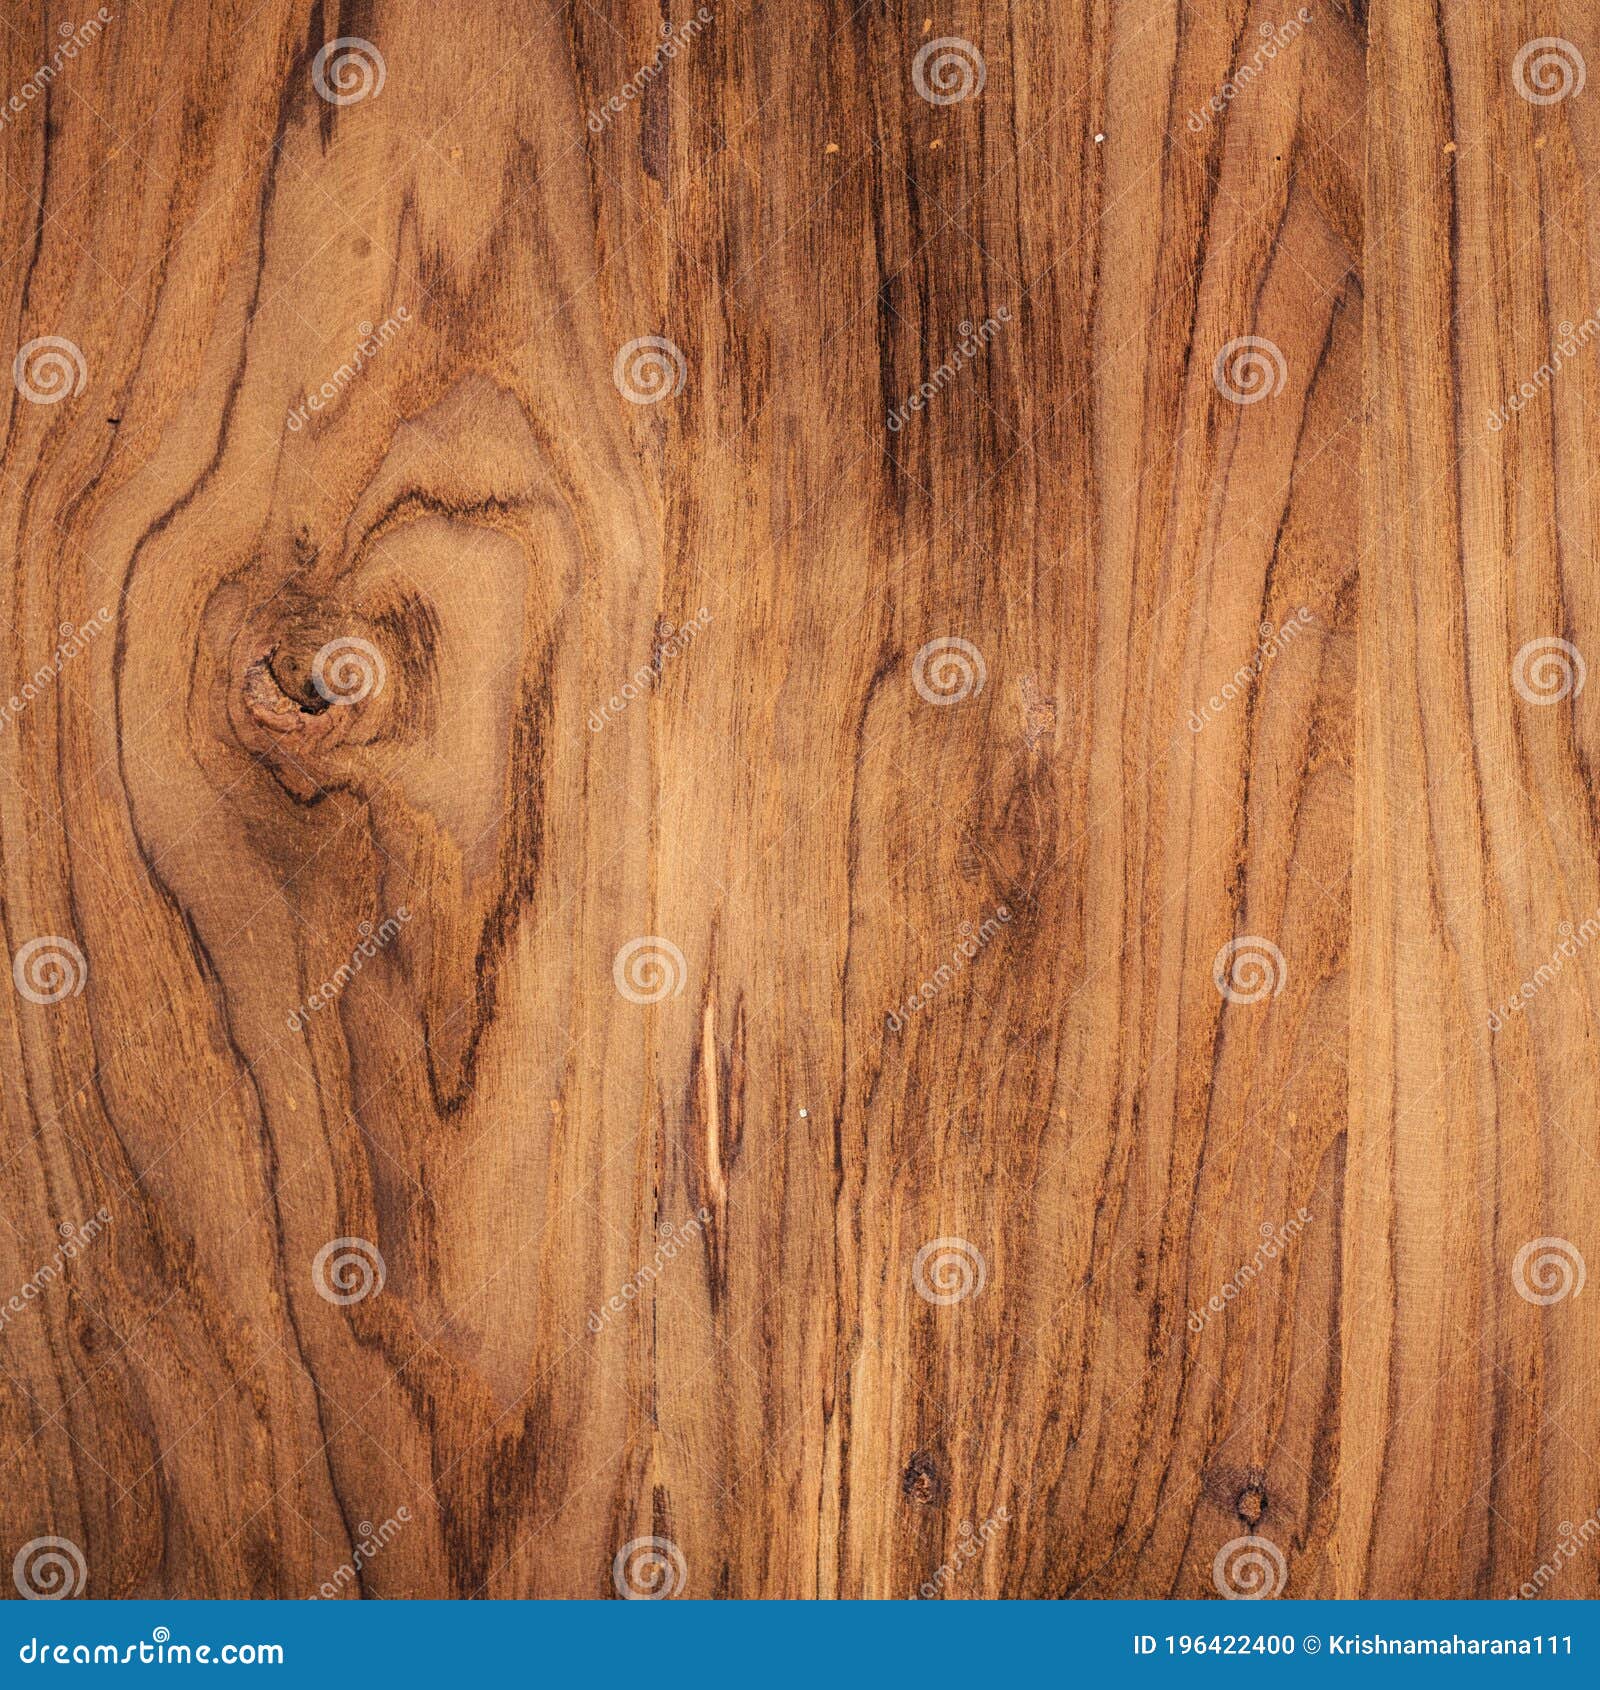 Hectare Zelden Ondraaglijk Old Teak Wood Texture Surface Close Up Photo Stock Photo - Image of brown,  texture: 196422400